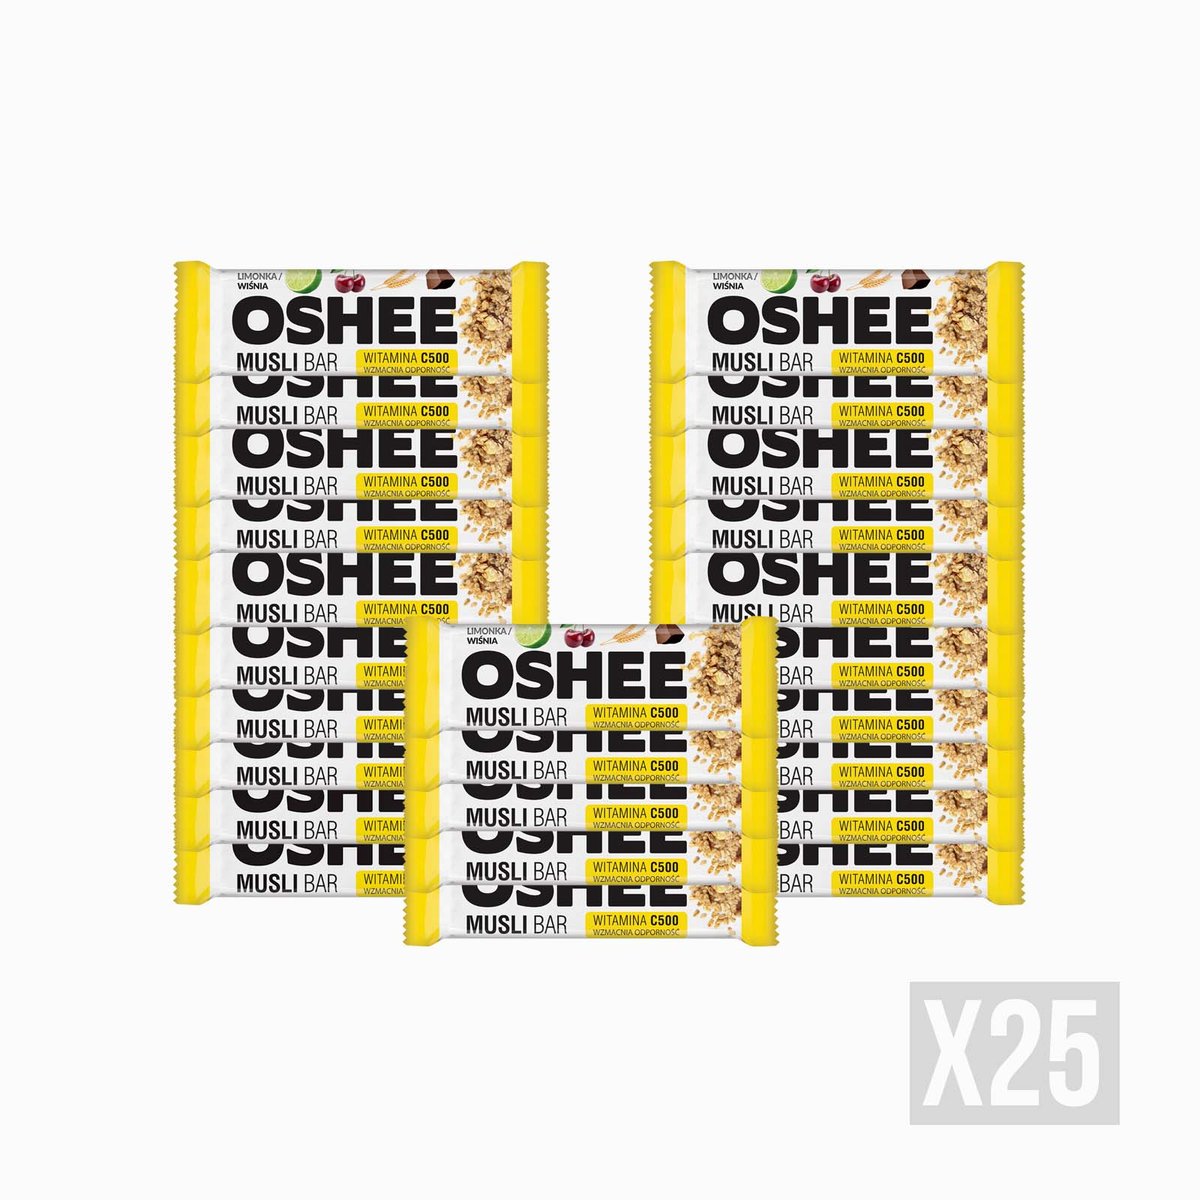 25x OSHEE Musli bar witamina C500 40 g